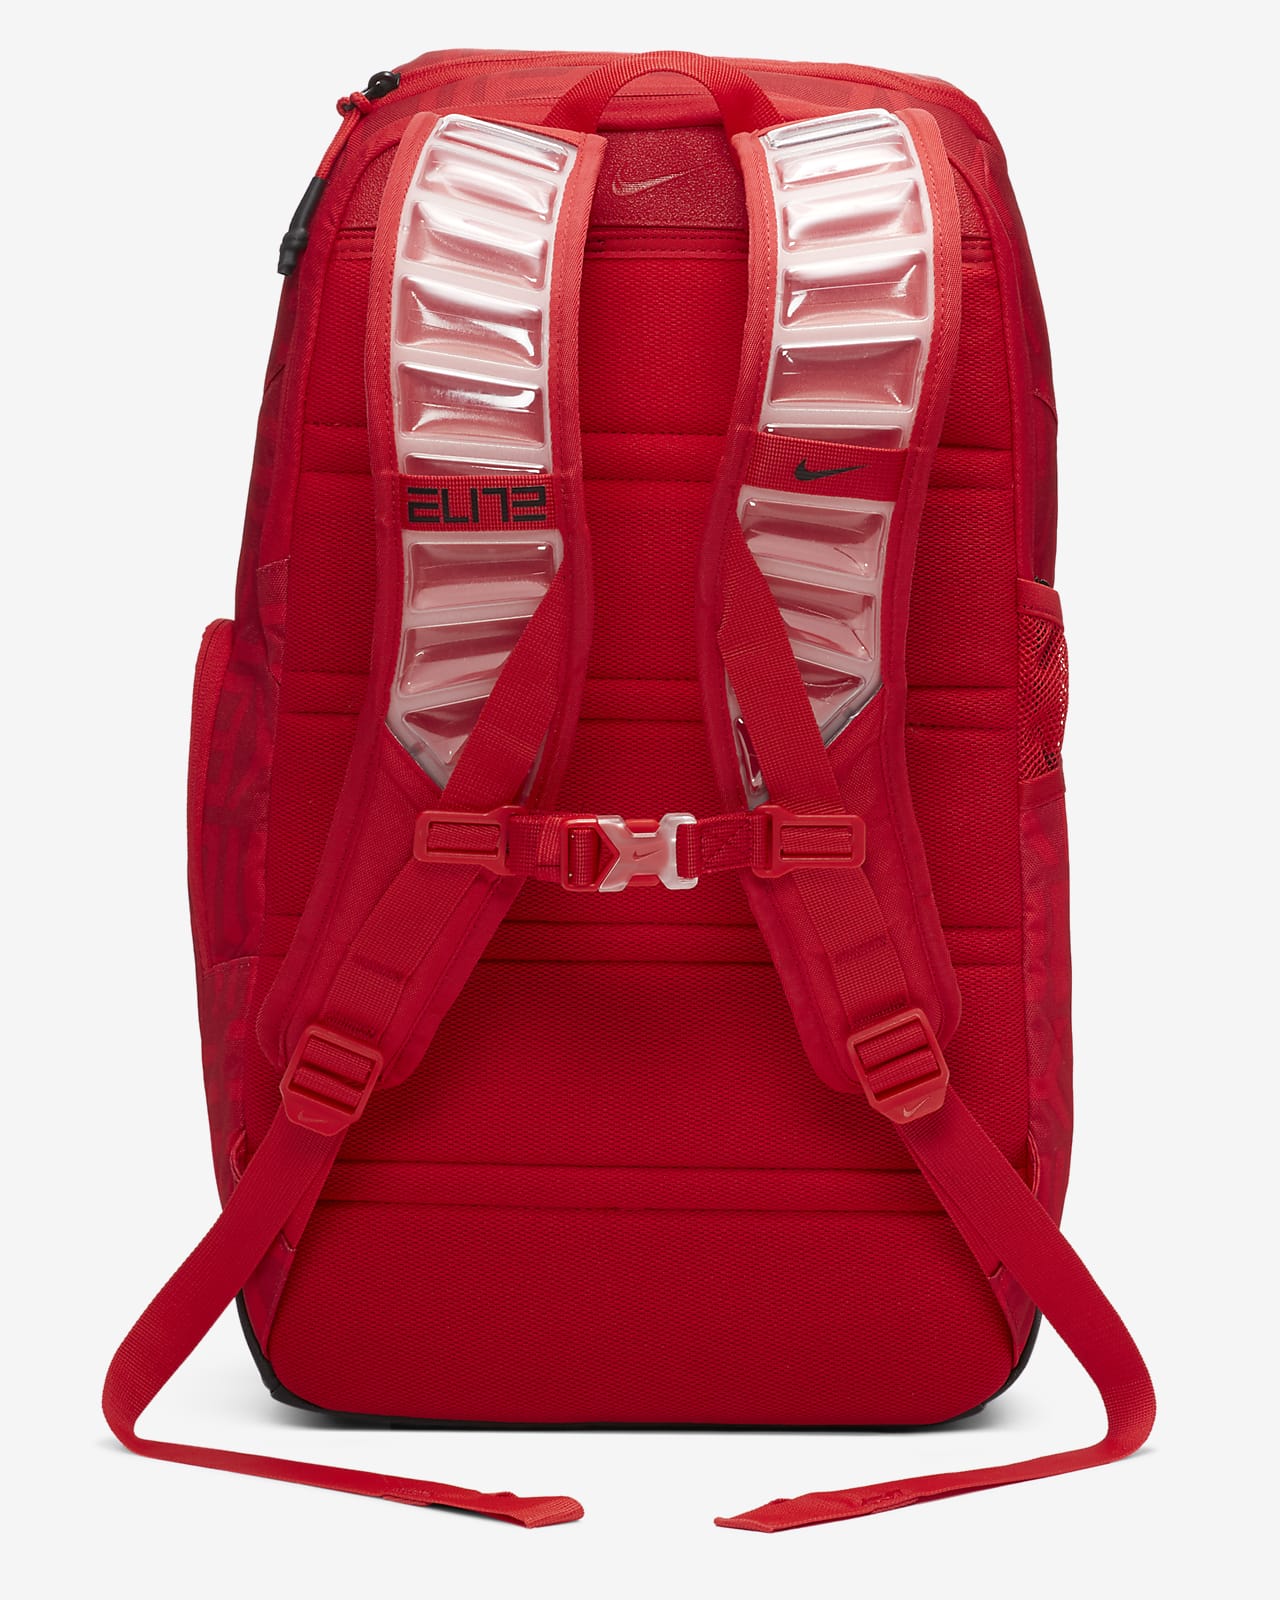 nike elite backpack white and red